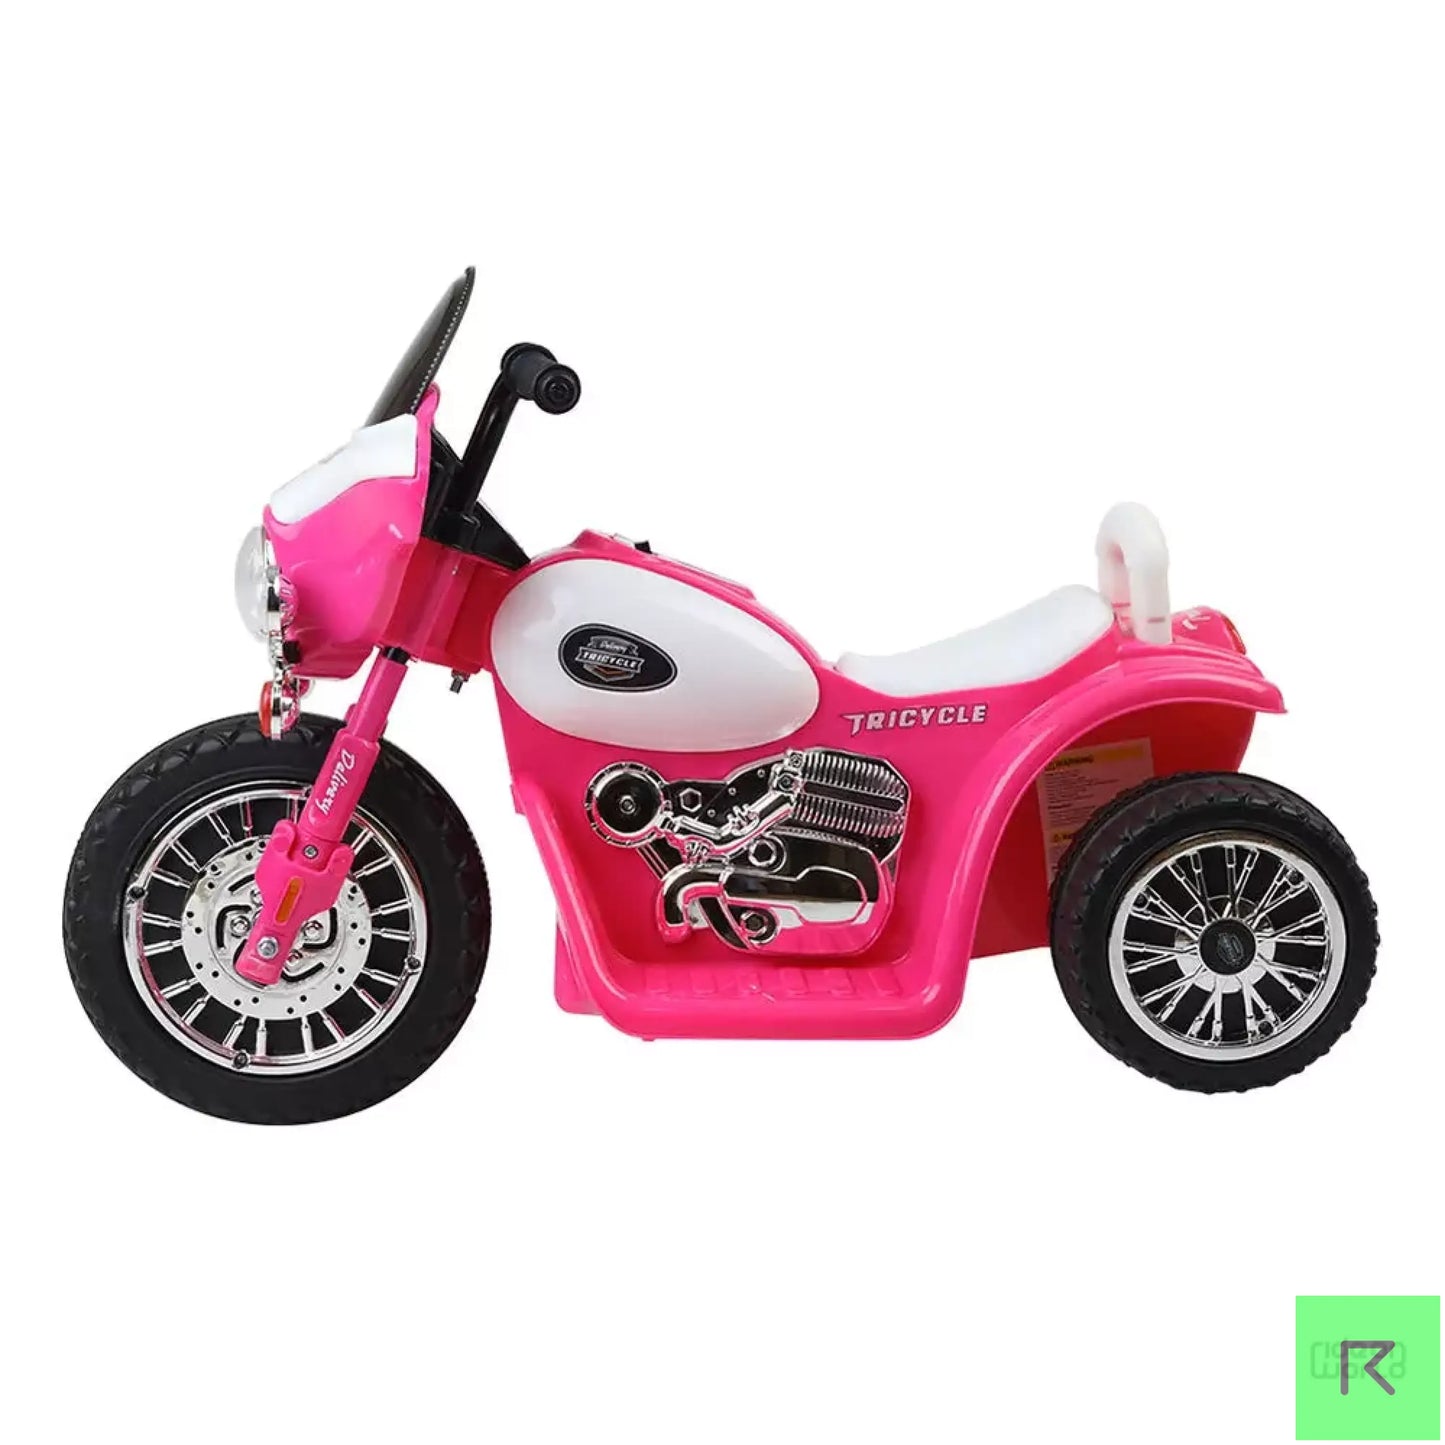 ROW KIDS Kids Ride On Motorcycle Motorbike Car Harley Style Electric Toy Police Bike